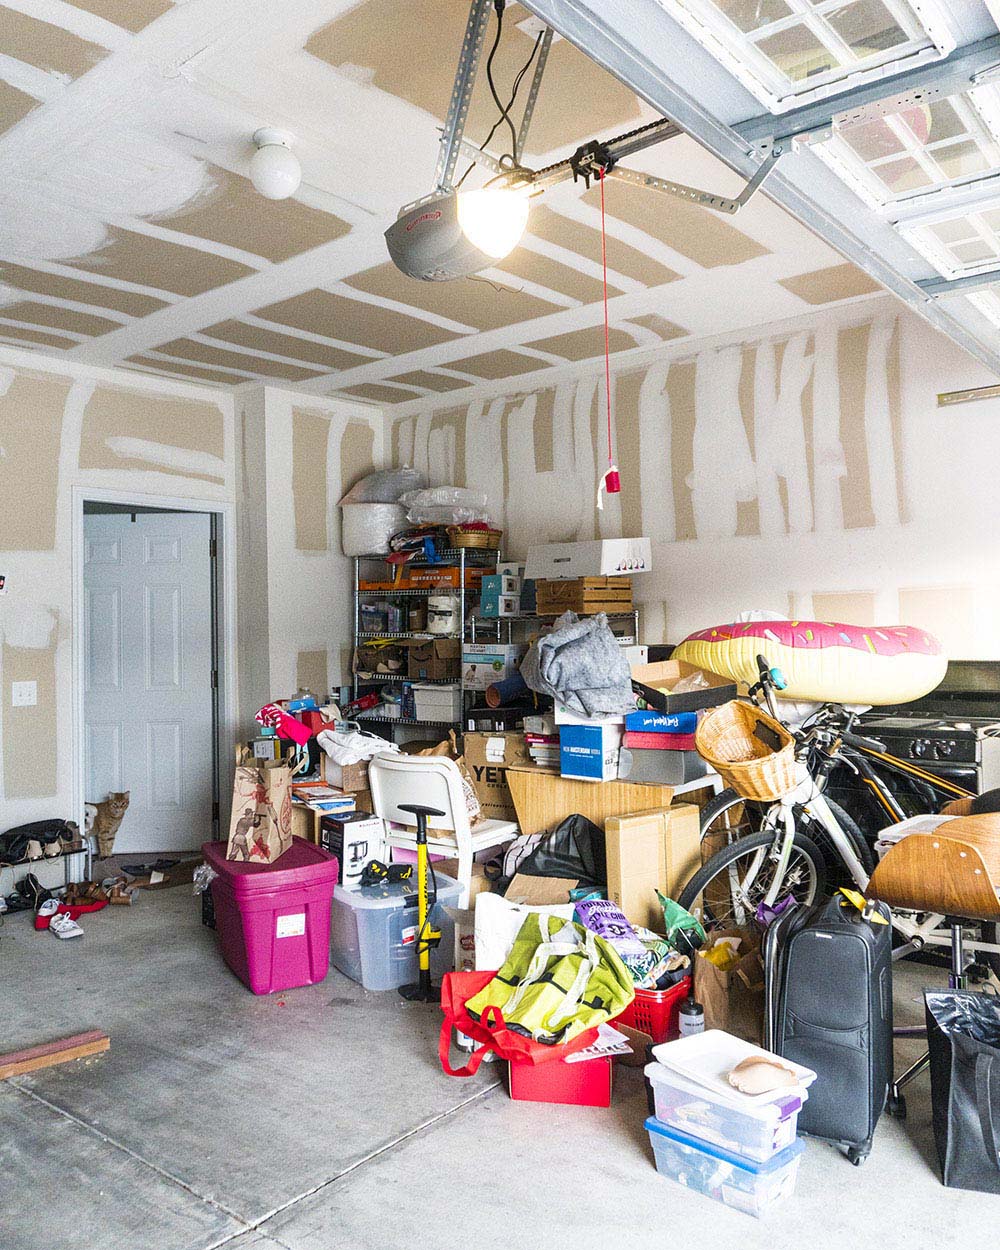 Open garage with items on the garage floor